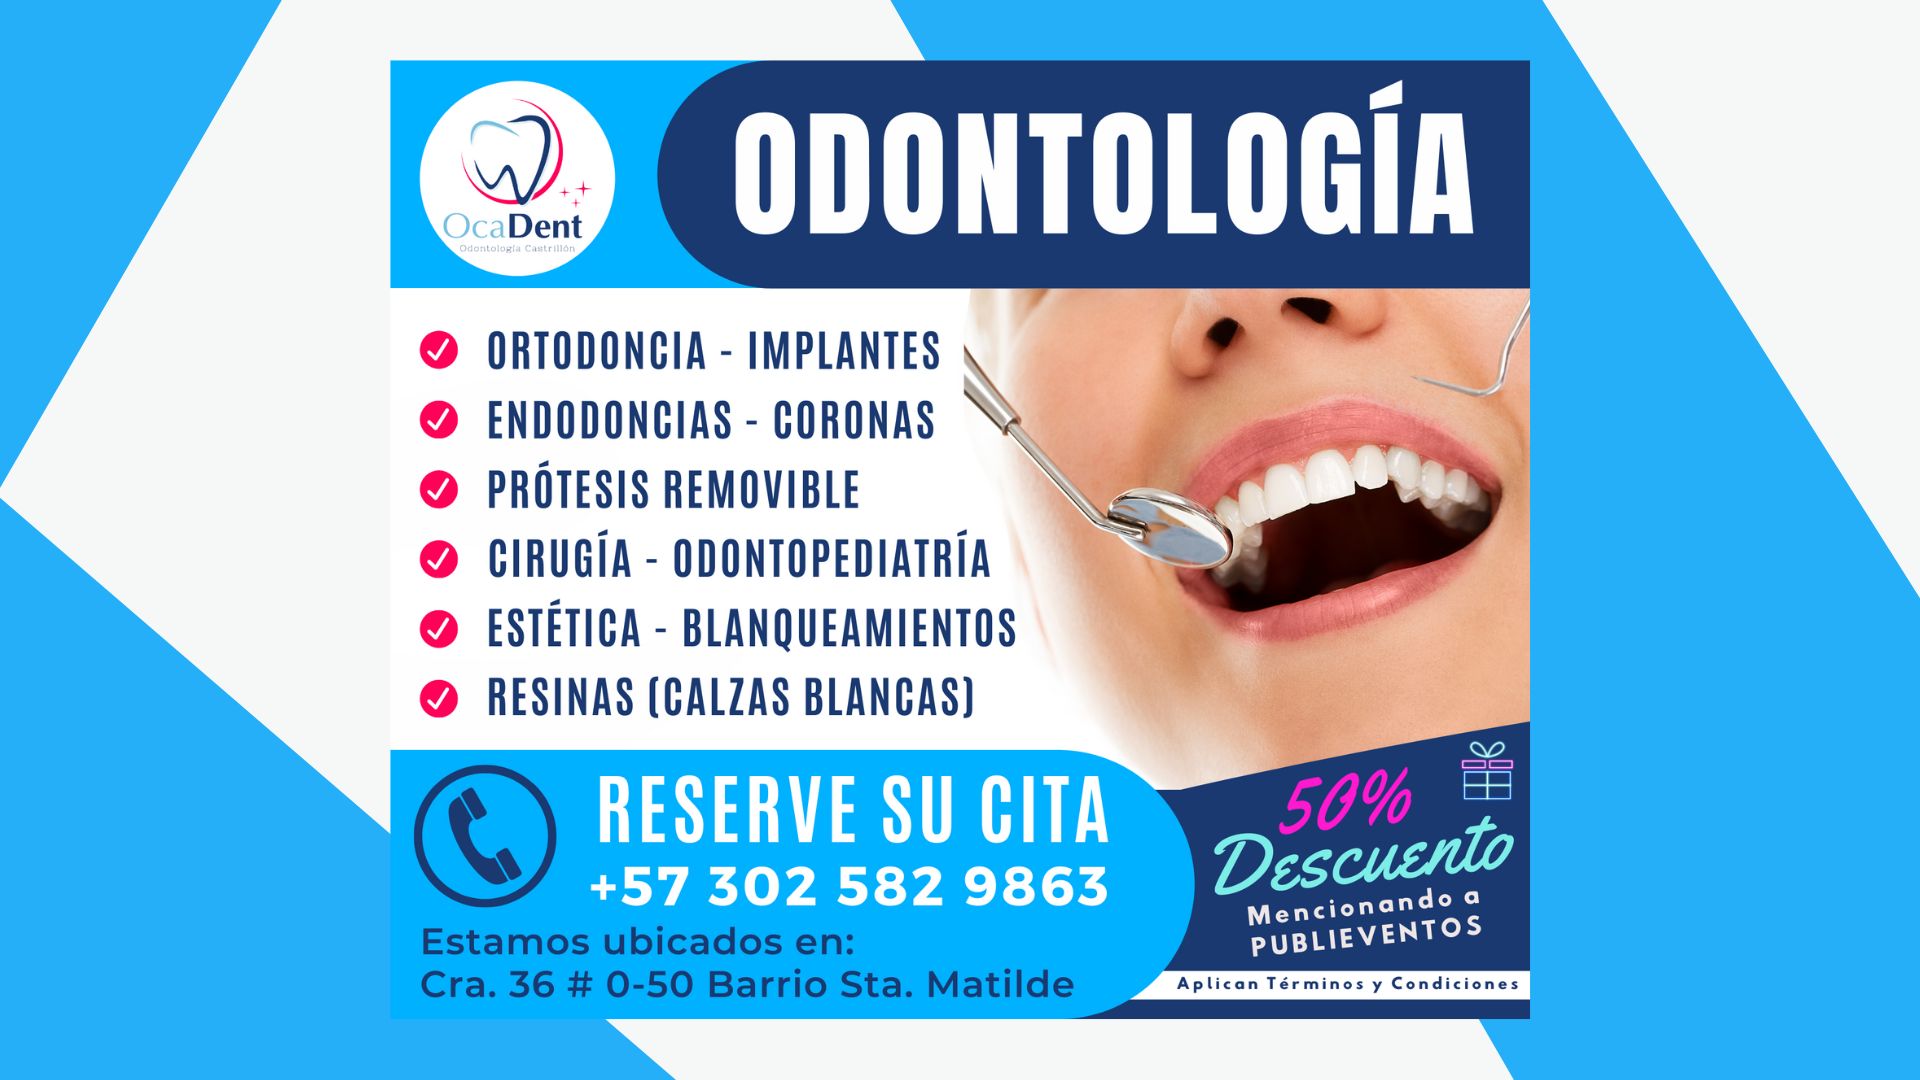 Odontología OcaDent